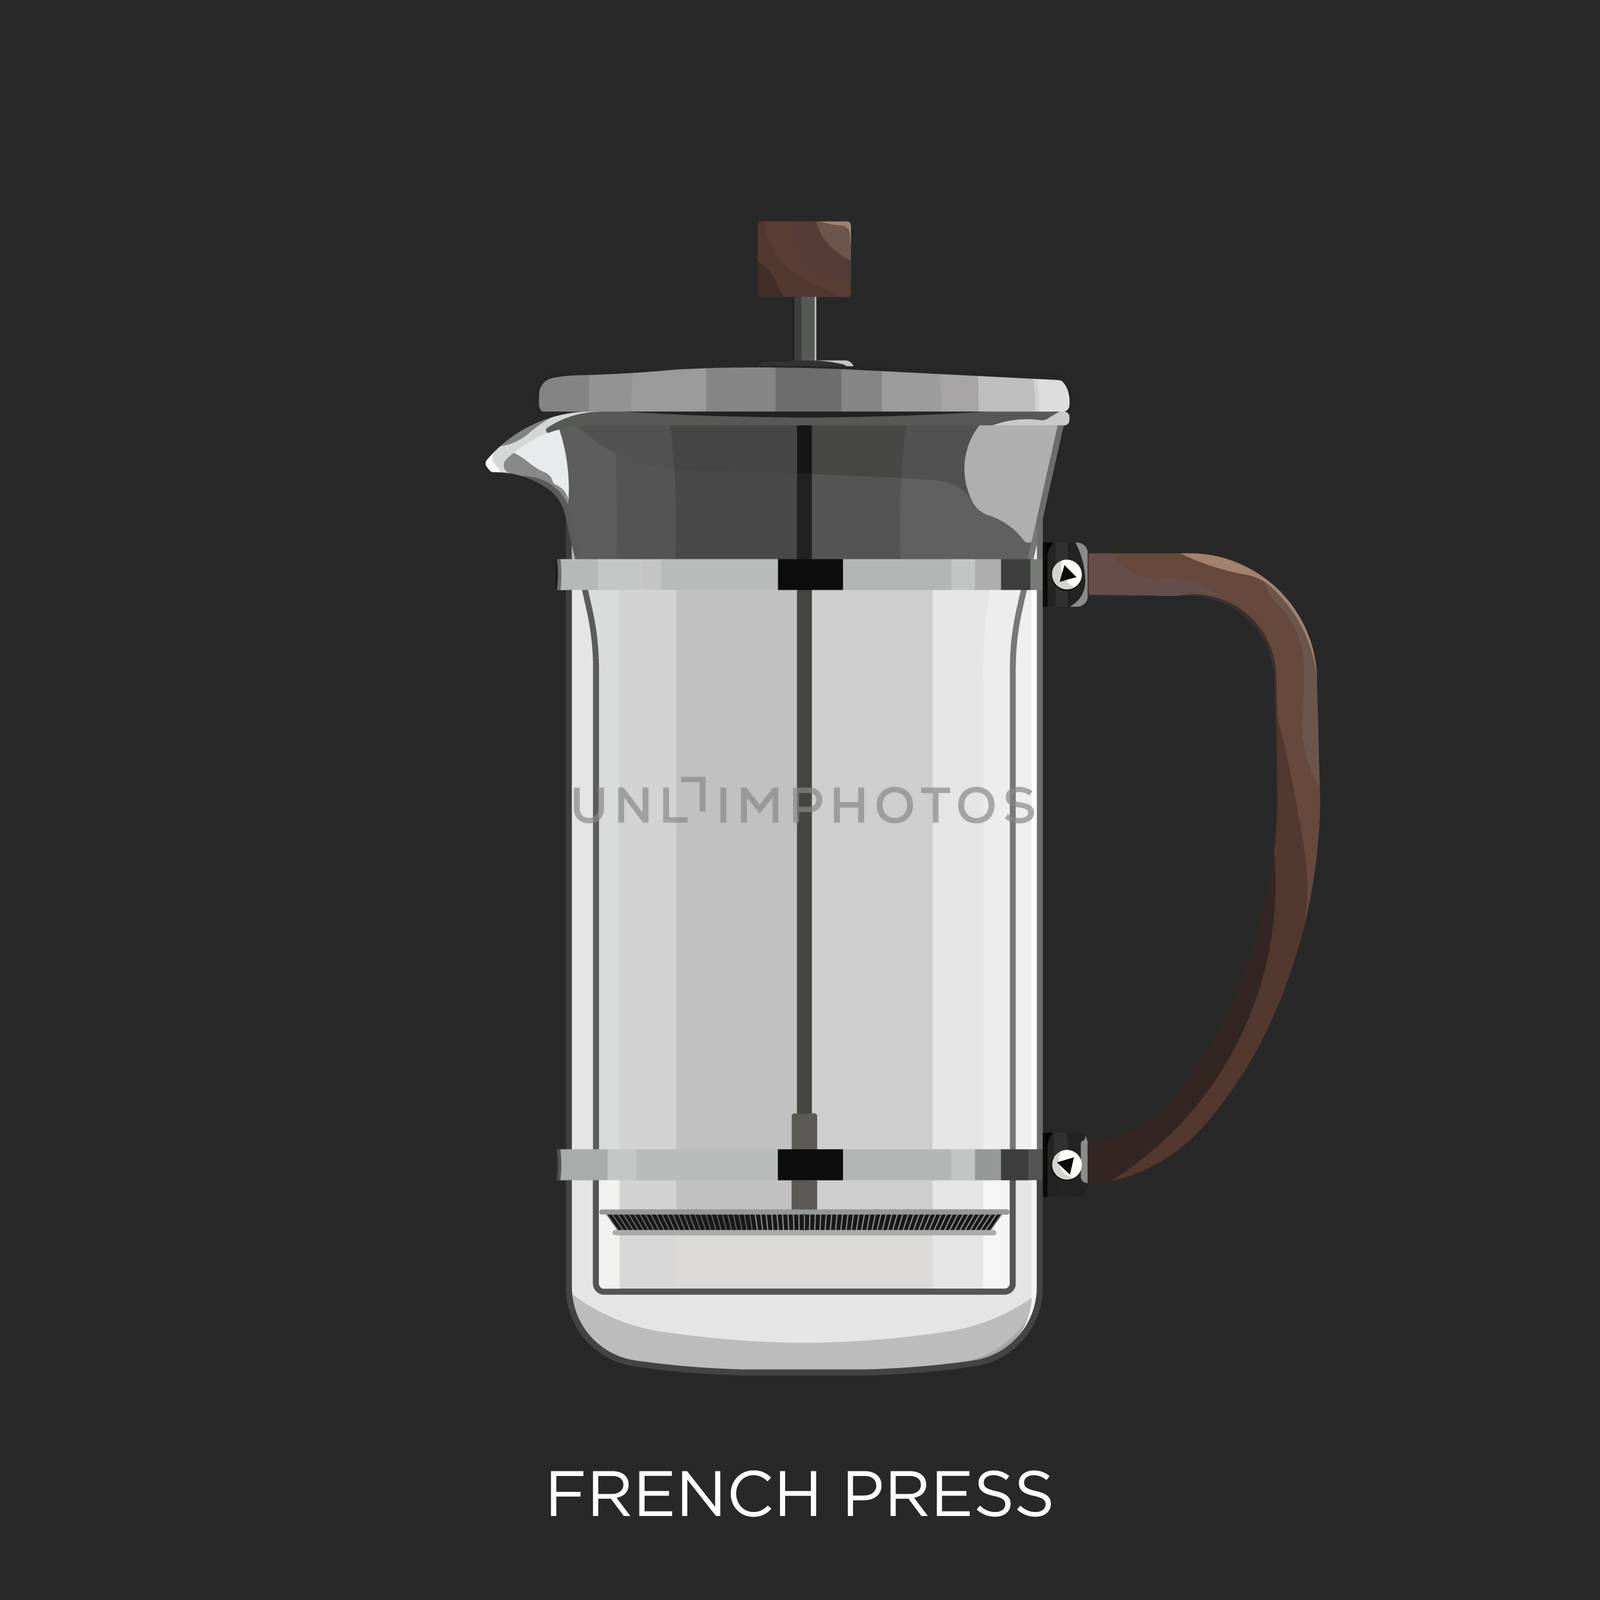 French Press Coffee Maker by landscafe